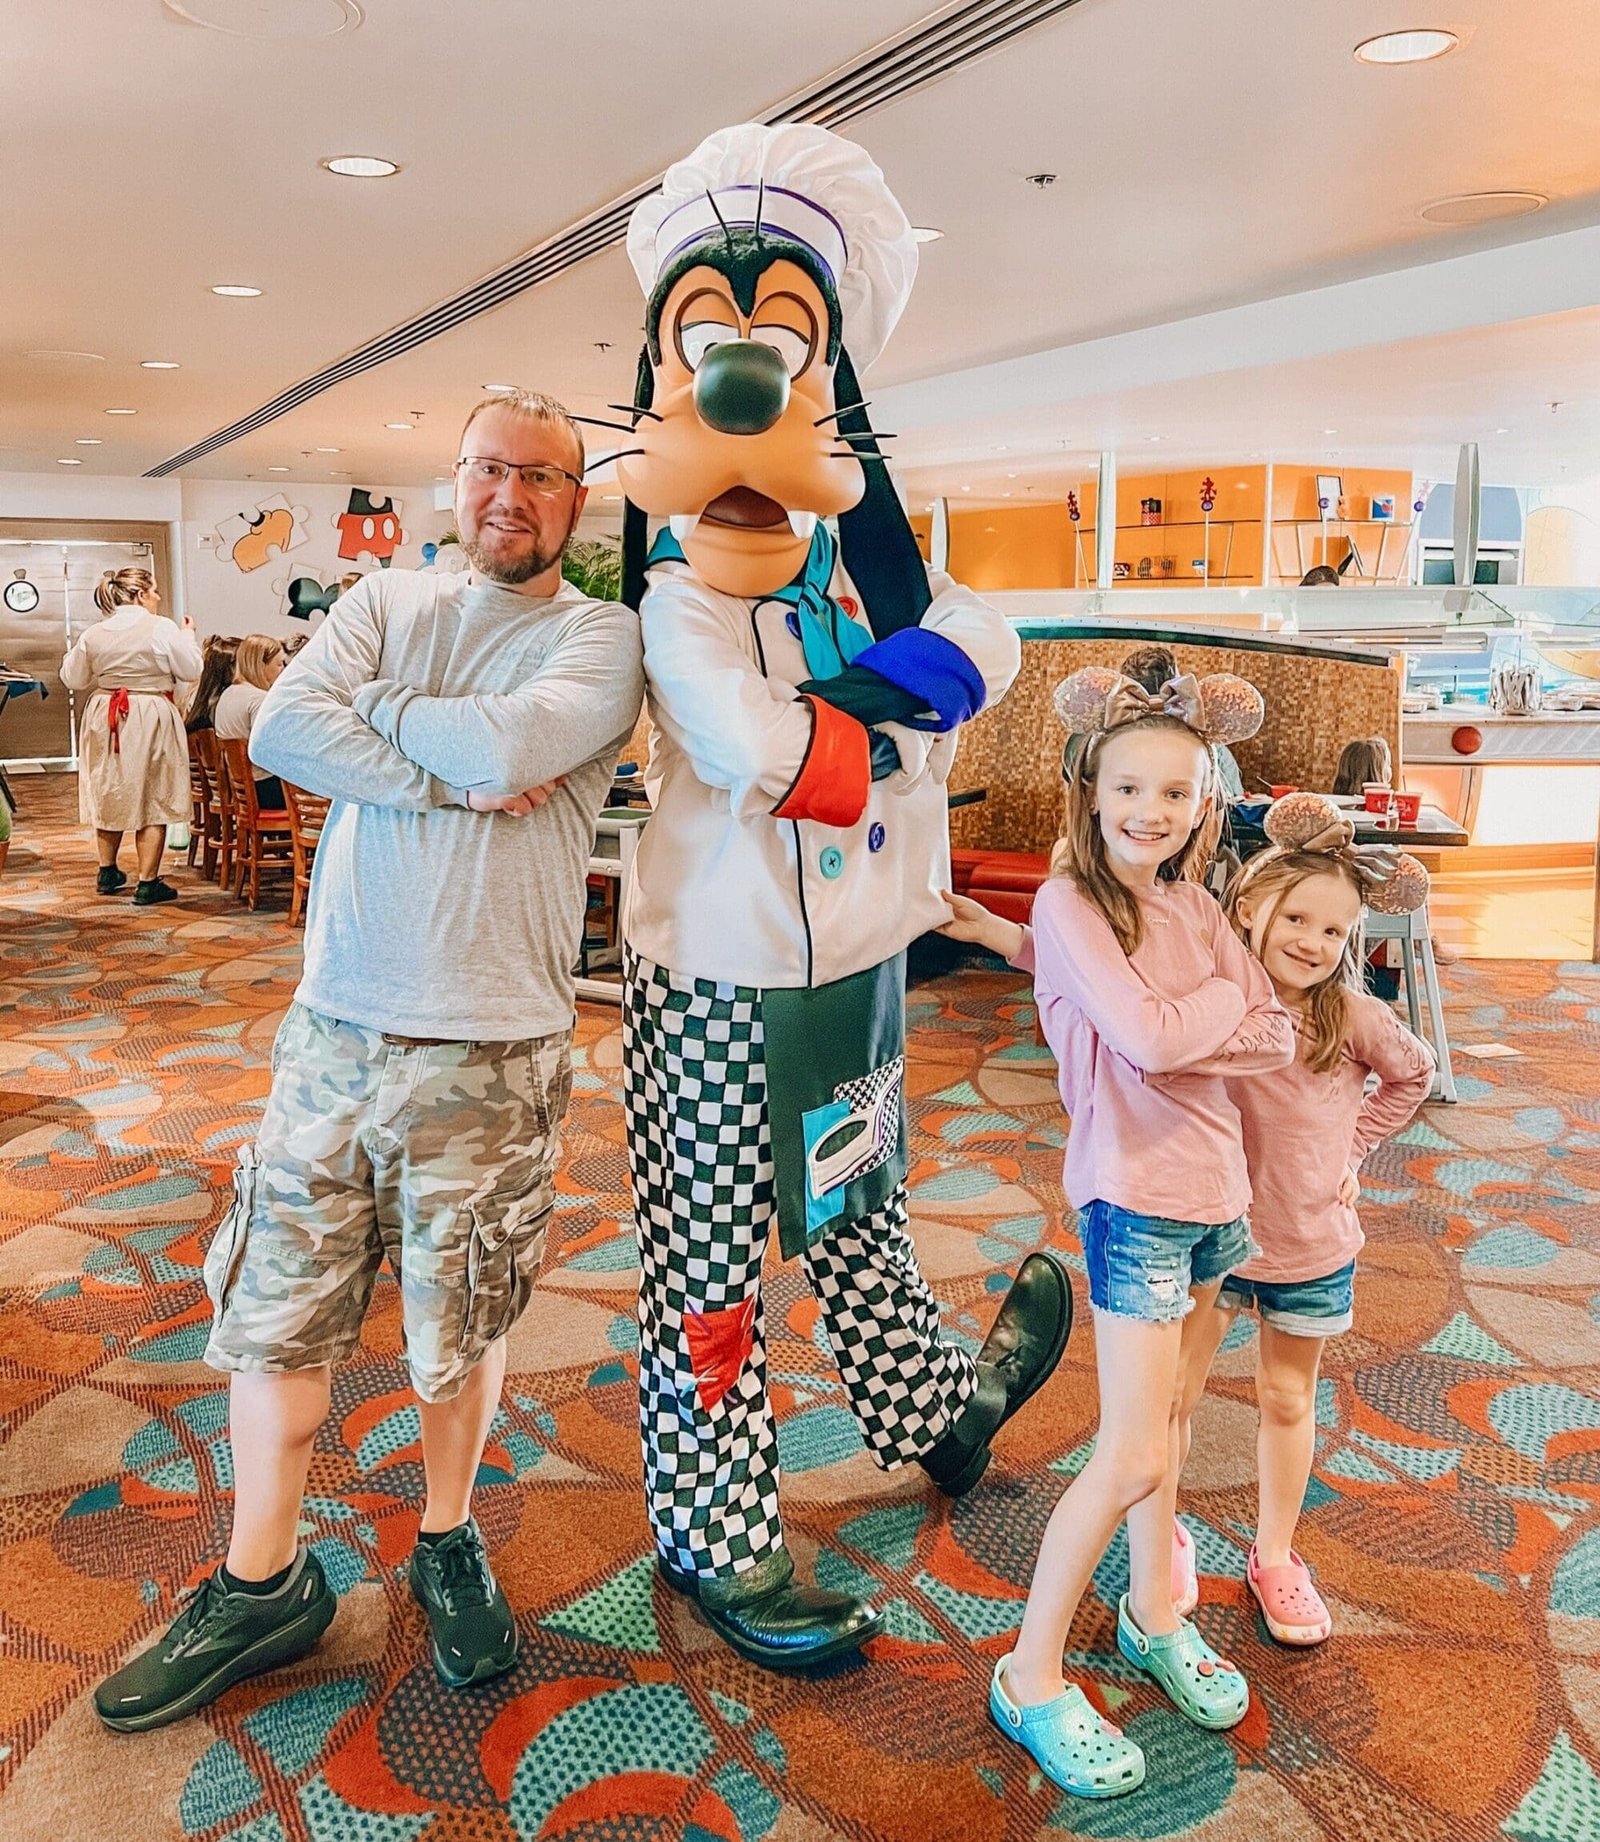 Chef Mickey and Goofy